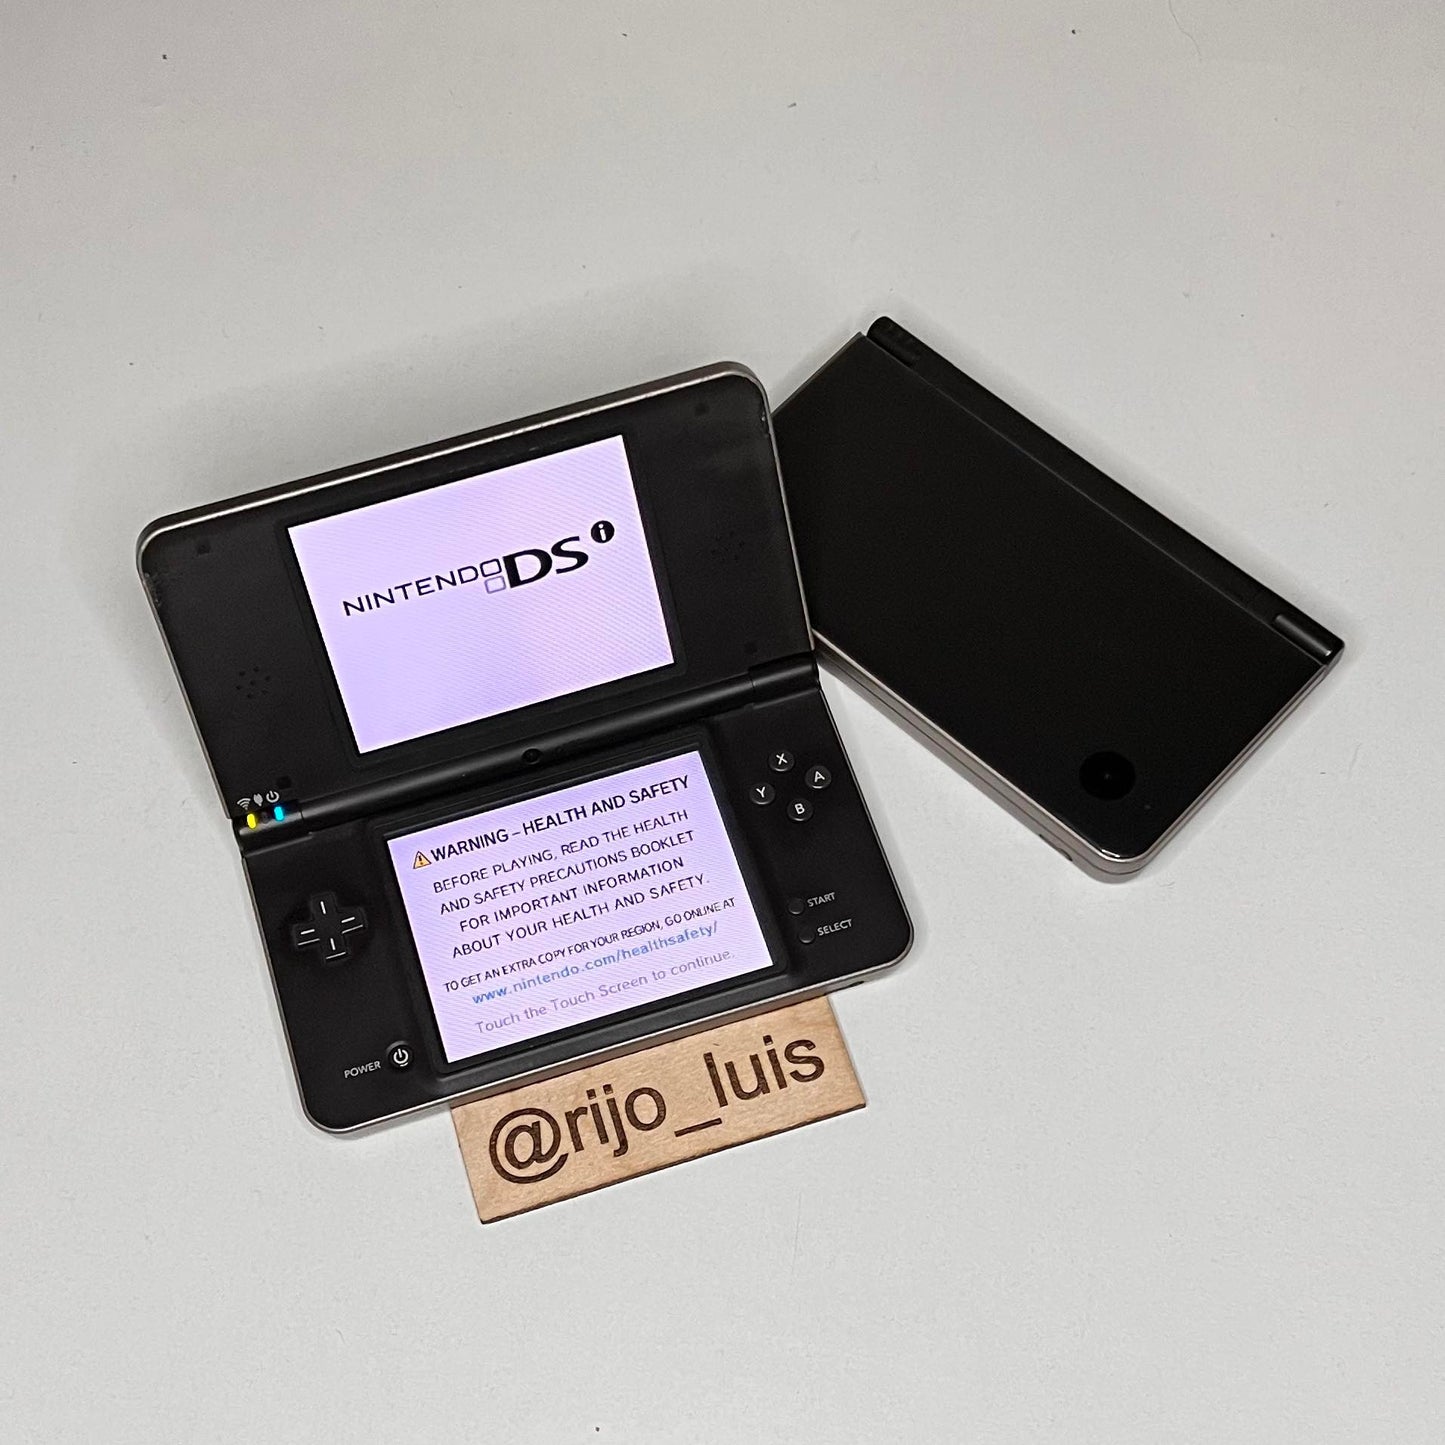 Nintendo DSi XL with Games